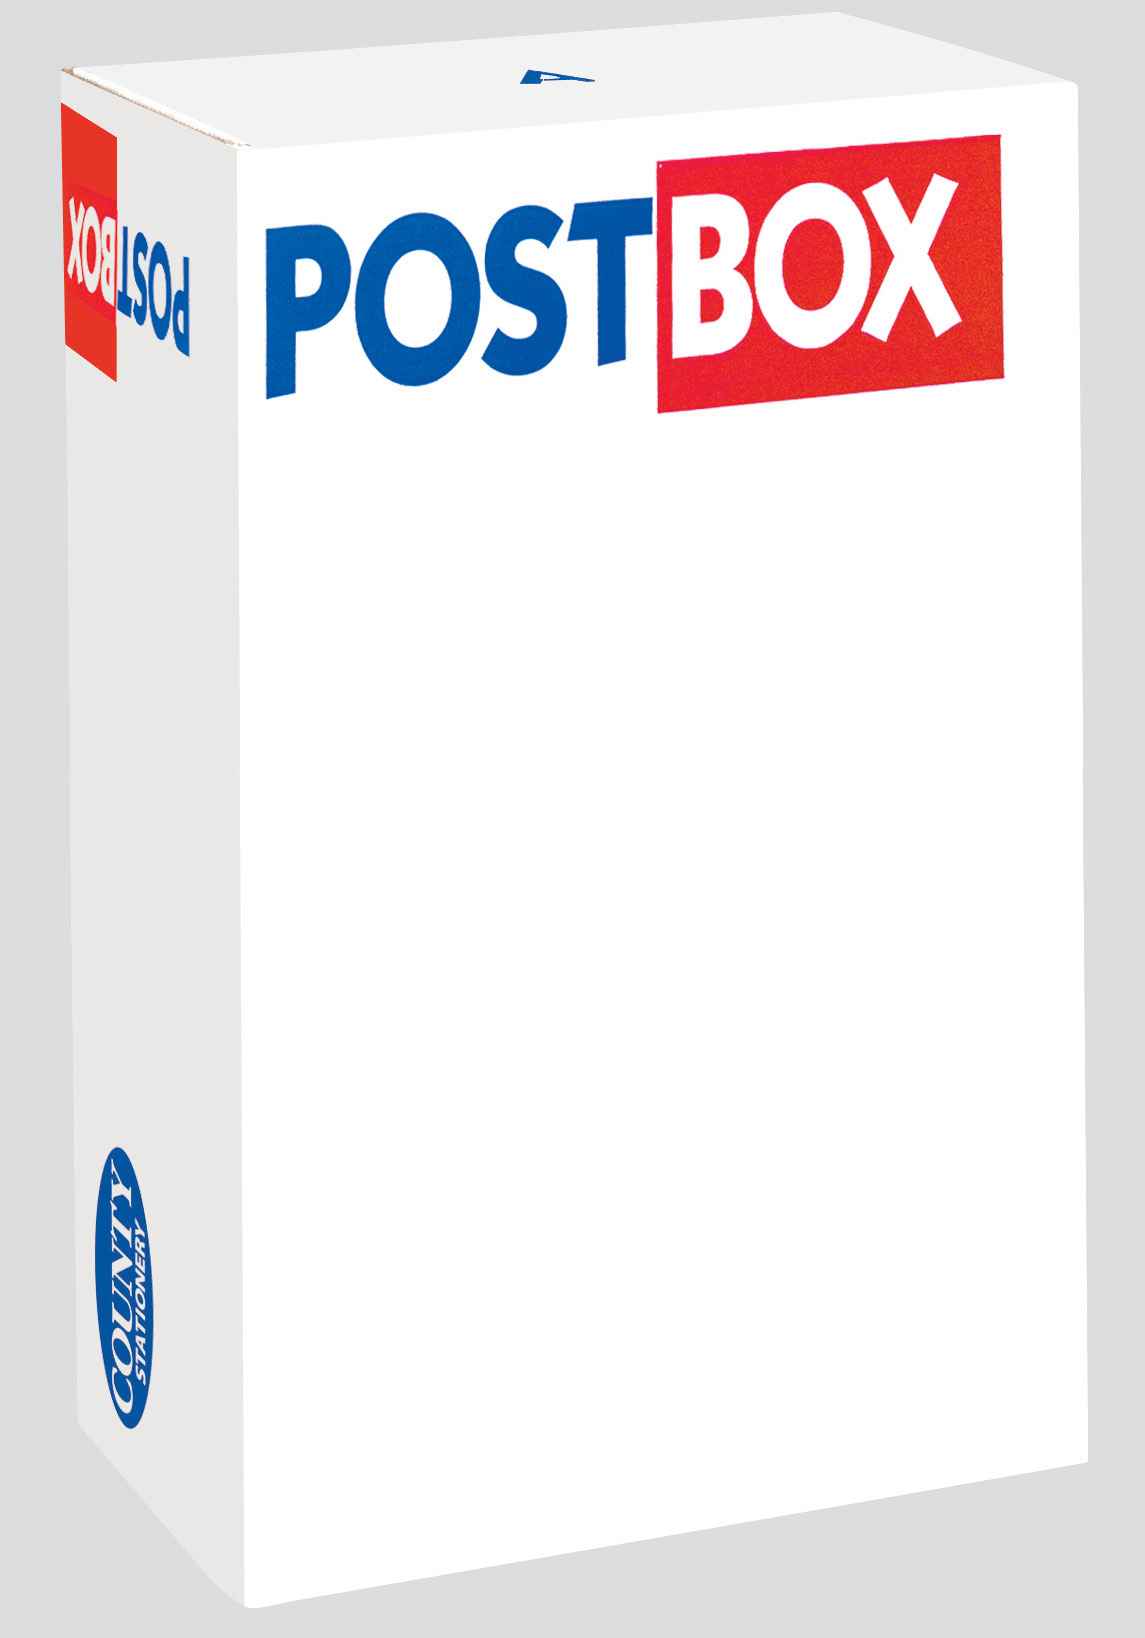 County Medium Mail Box Shoe size 350mmx250mmx160mm